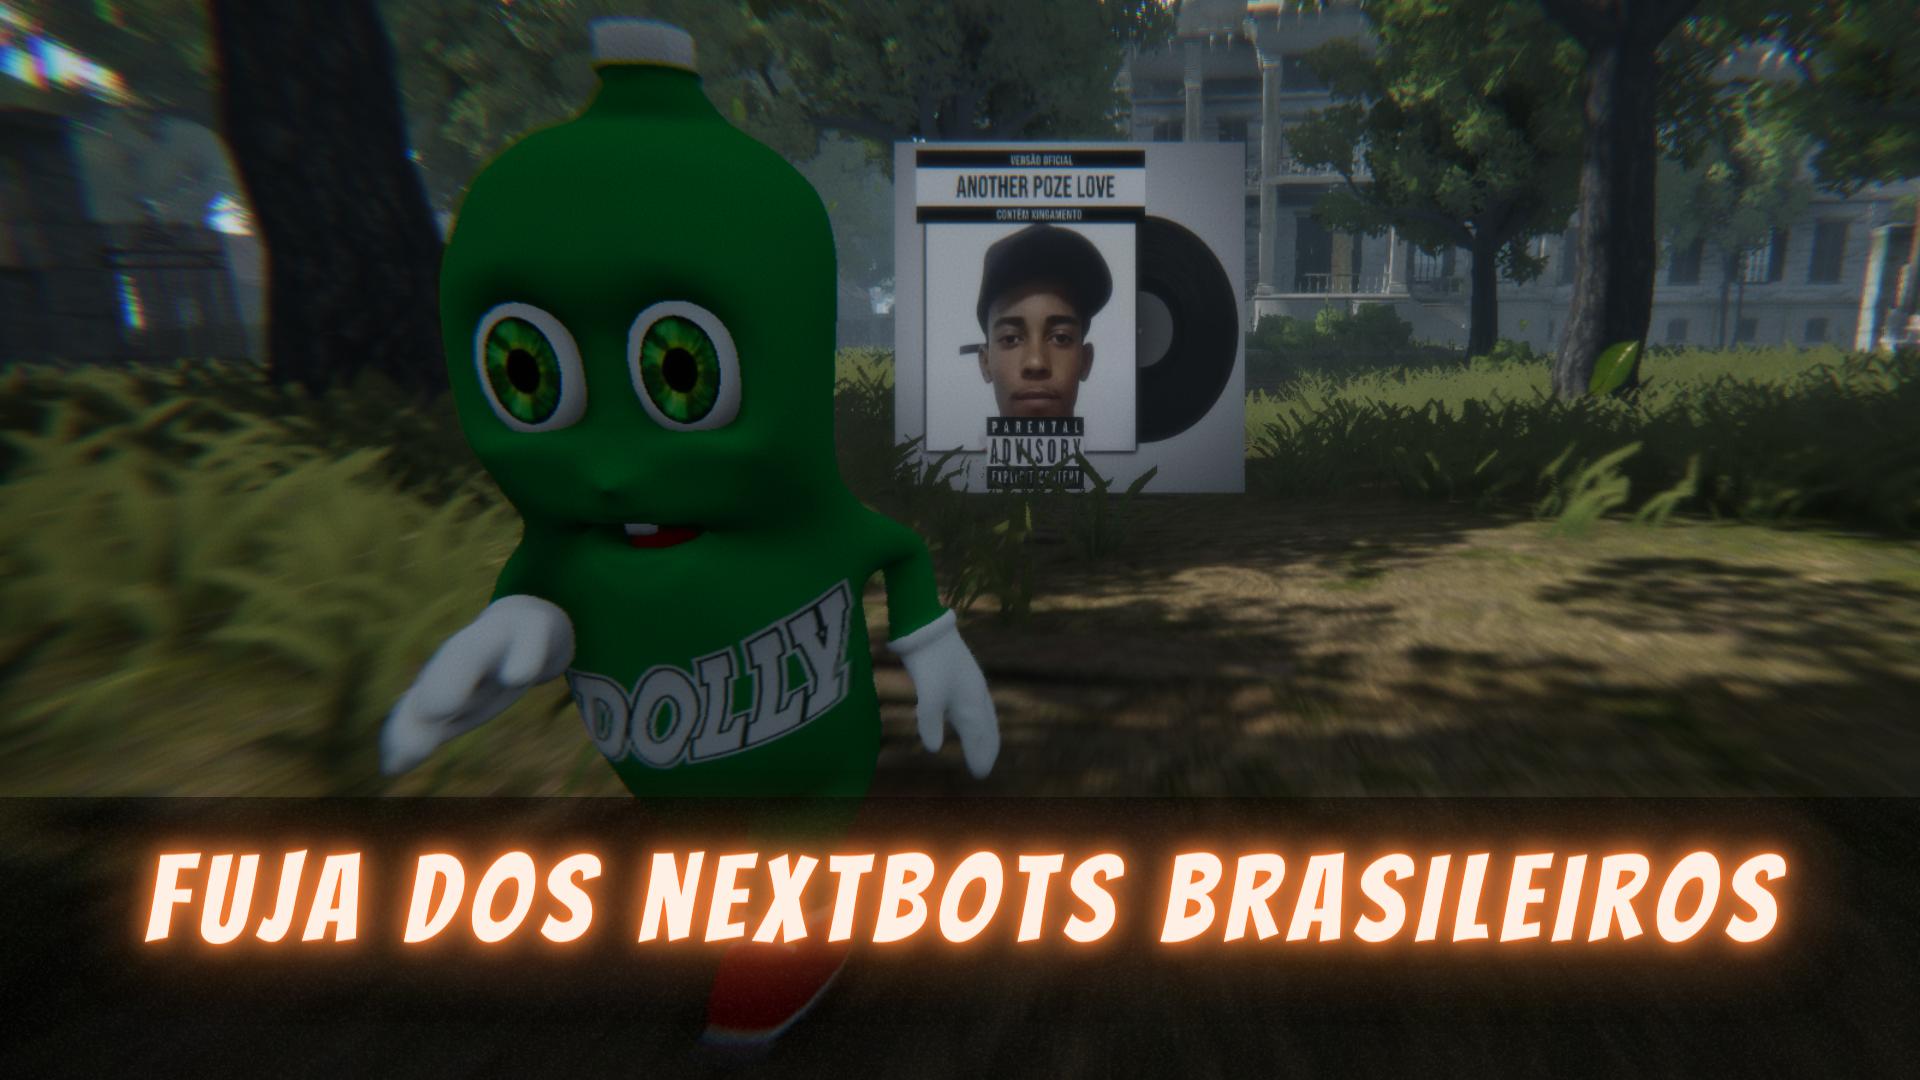 Download Nextbots Memes BR on PC (Emulator) - LDPlayer